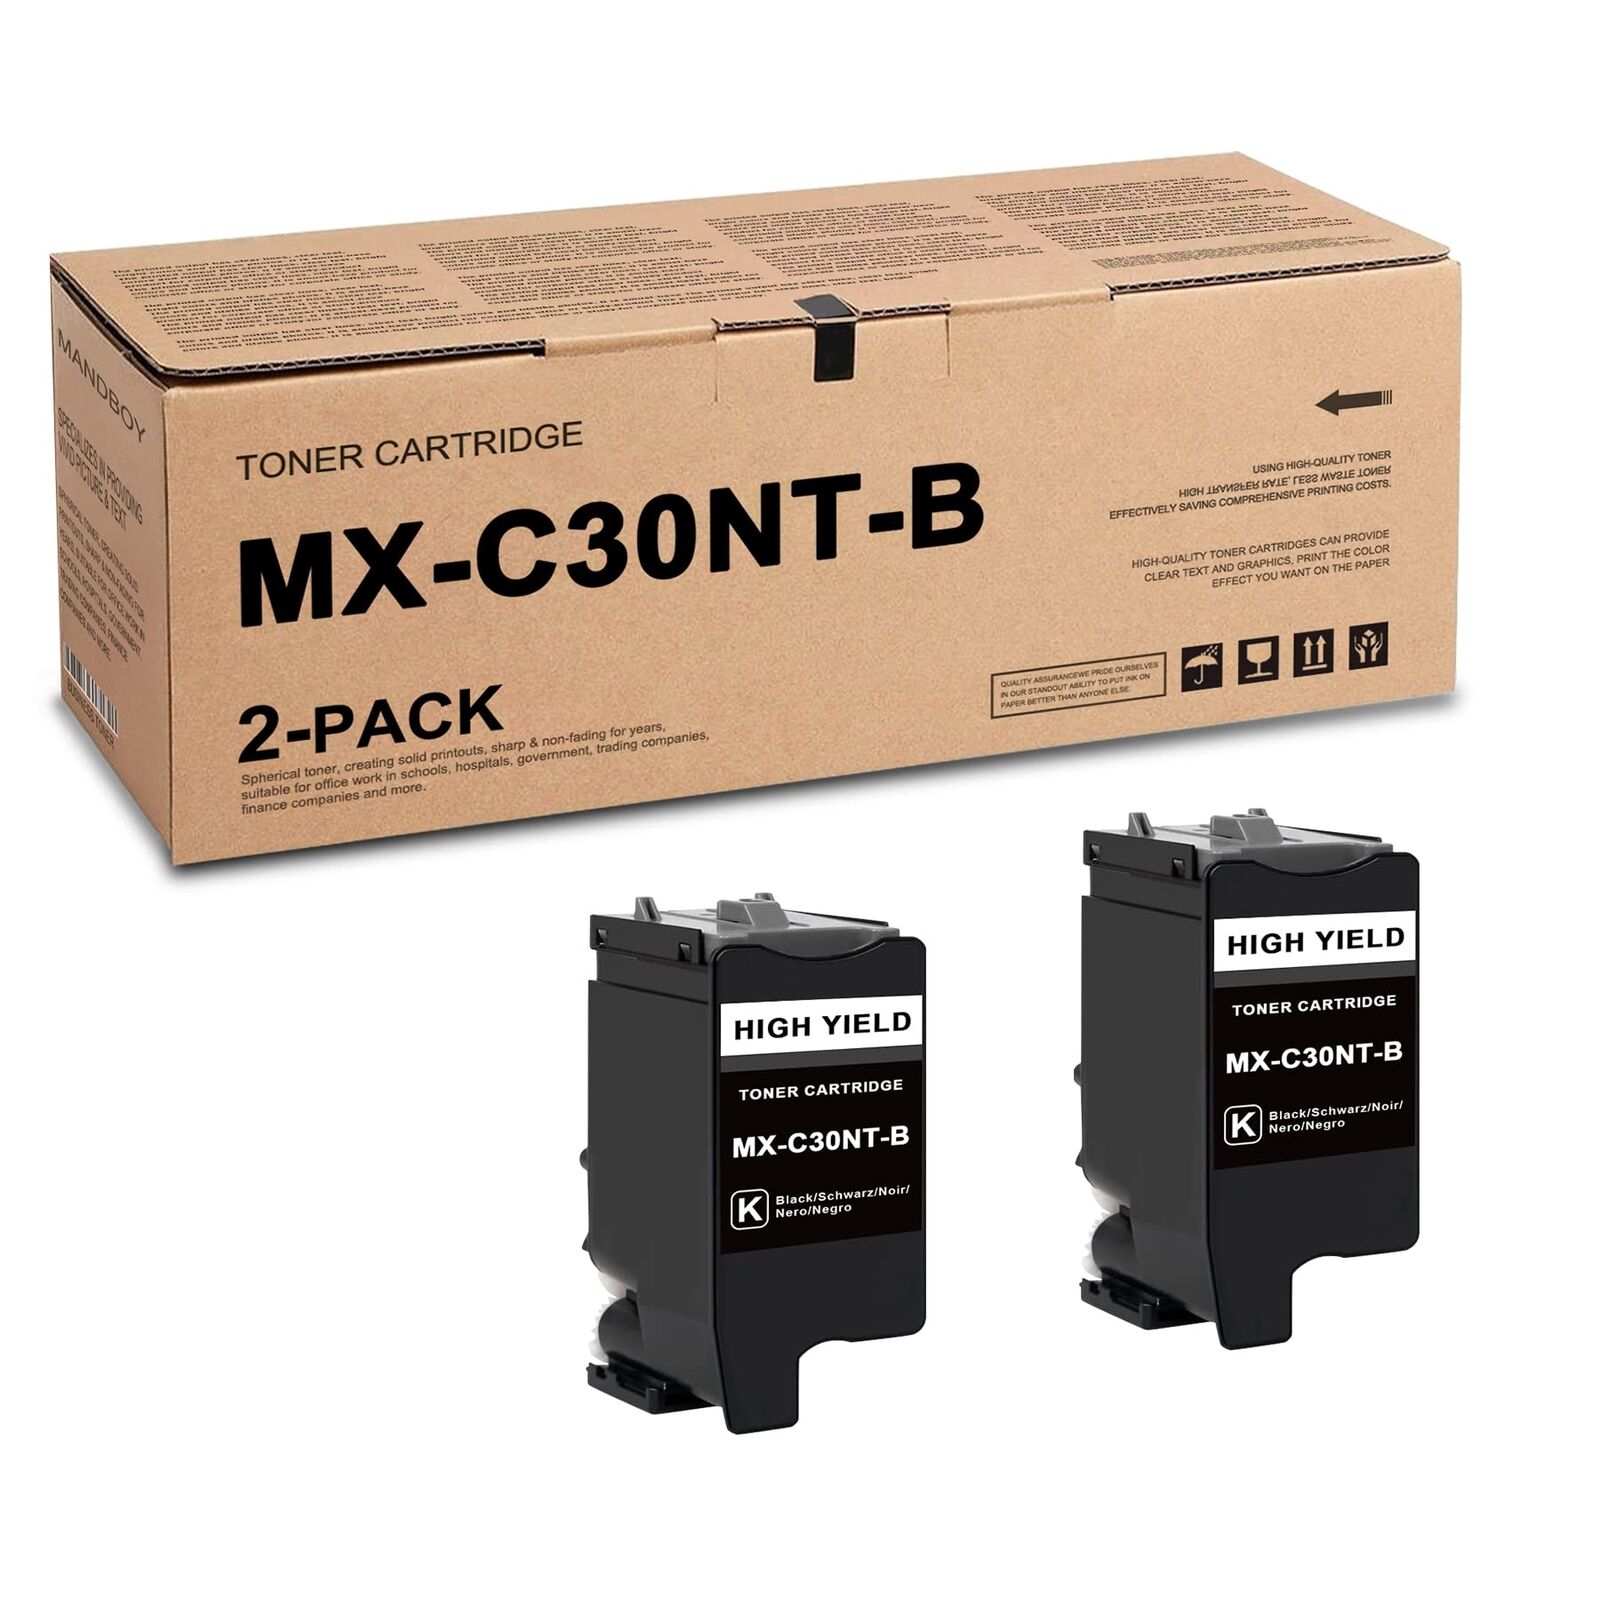 MX-C30NT-B Black Toner Cartridge 2-Pack, High Yield for Sharp MX-C300W MX-C300P